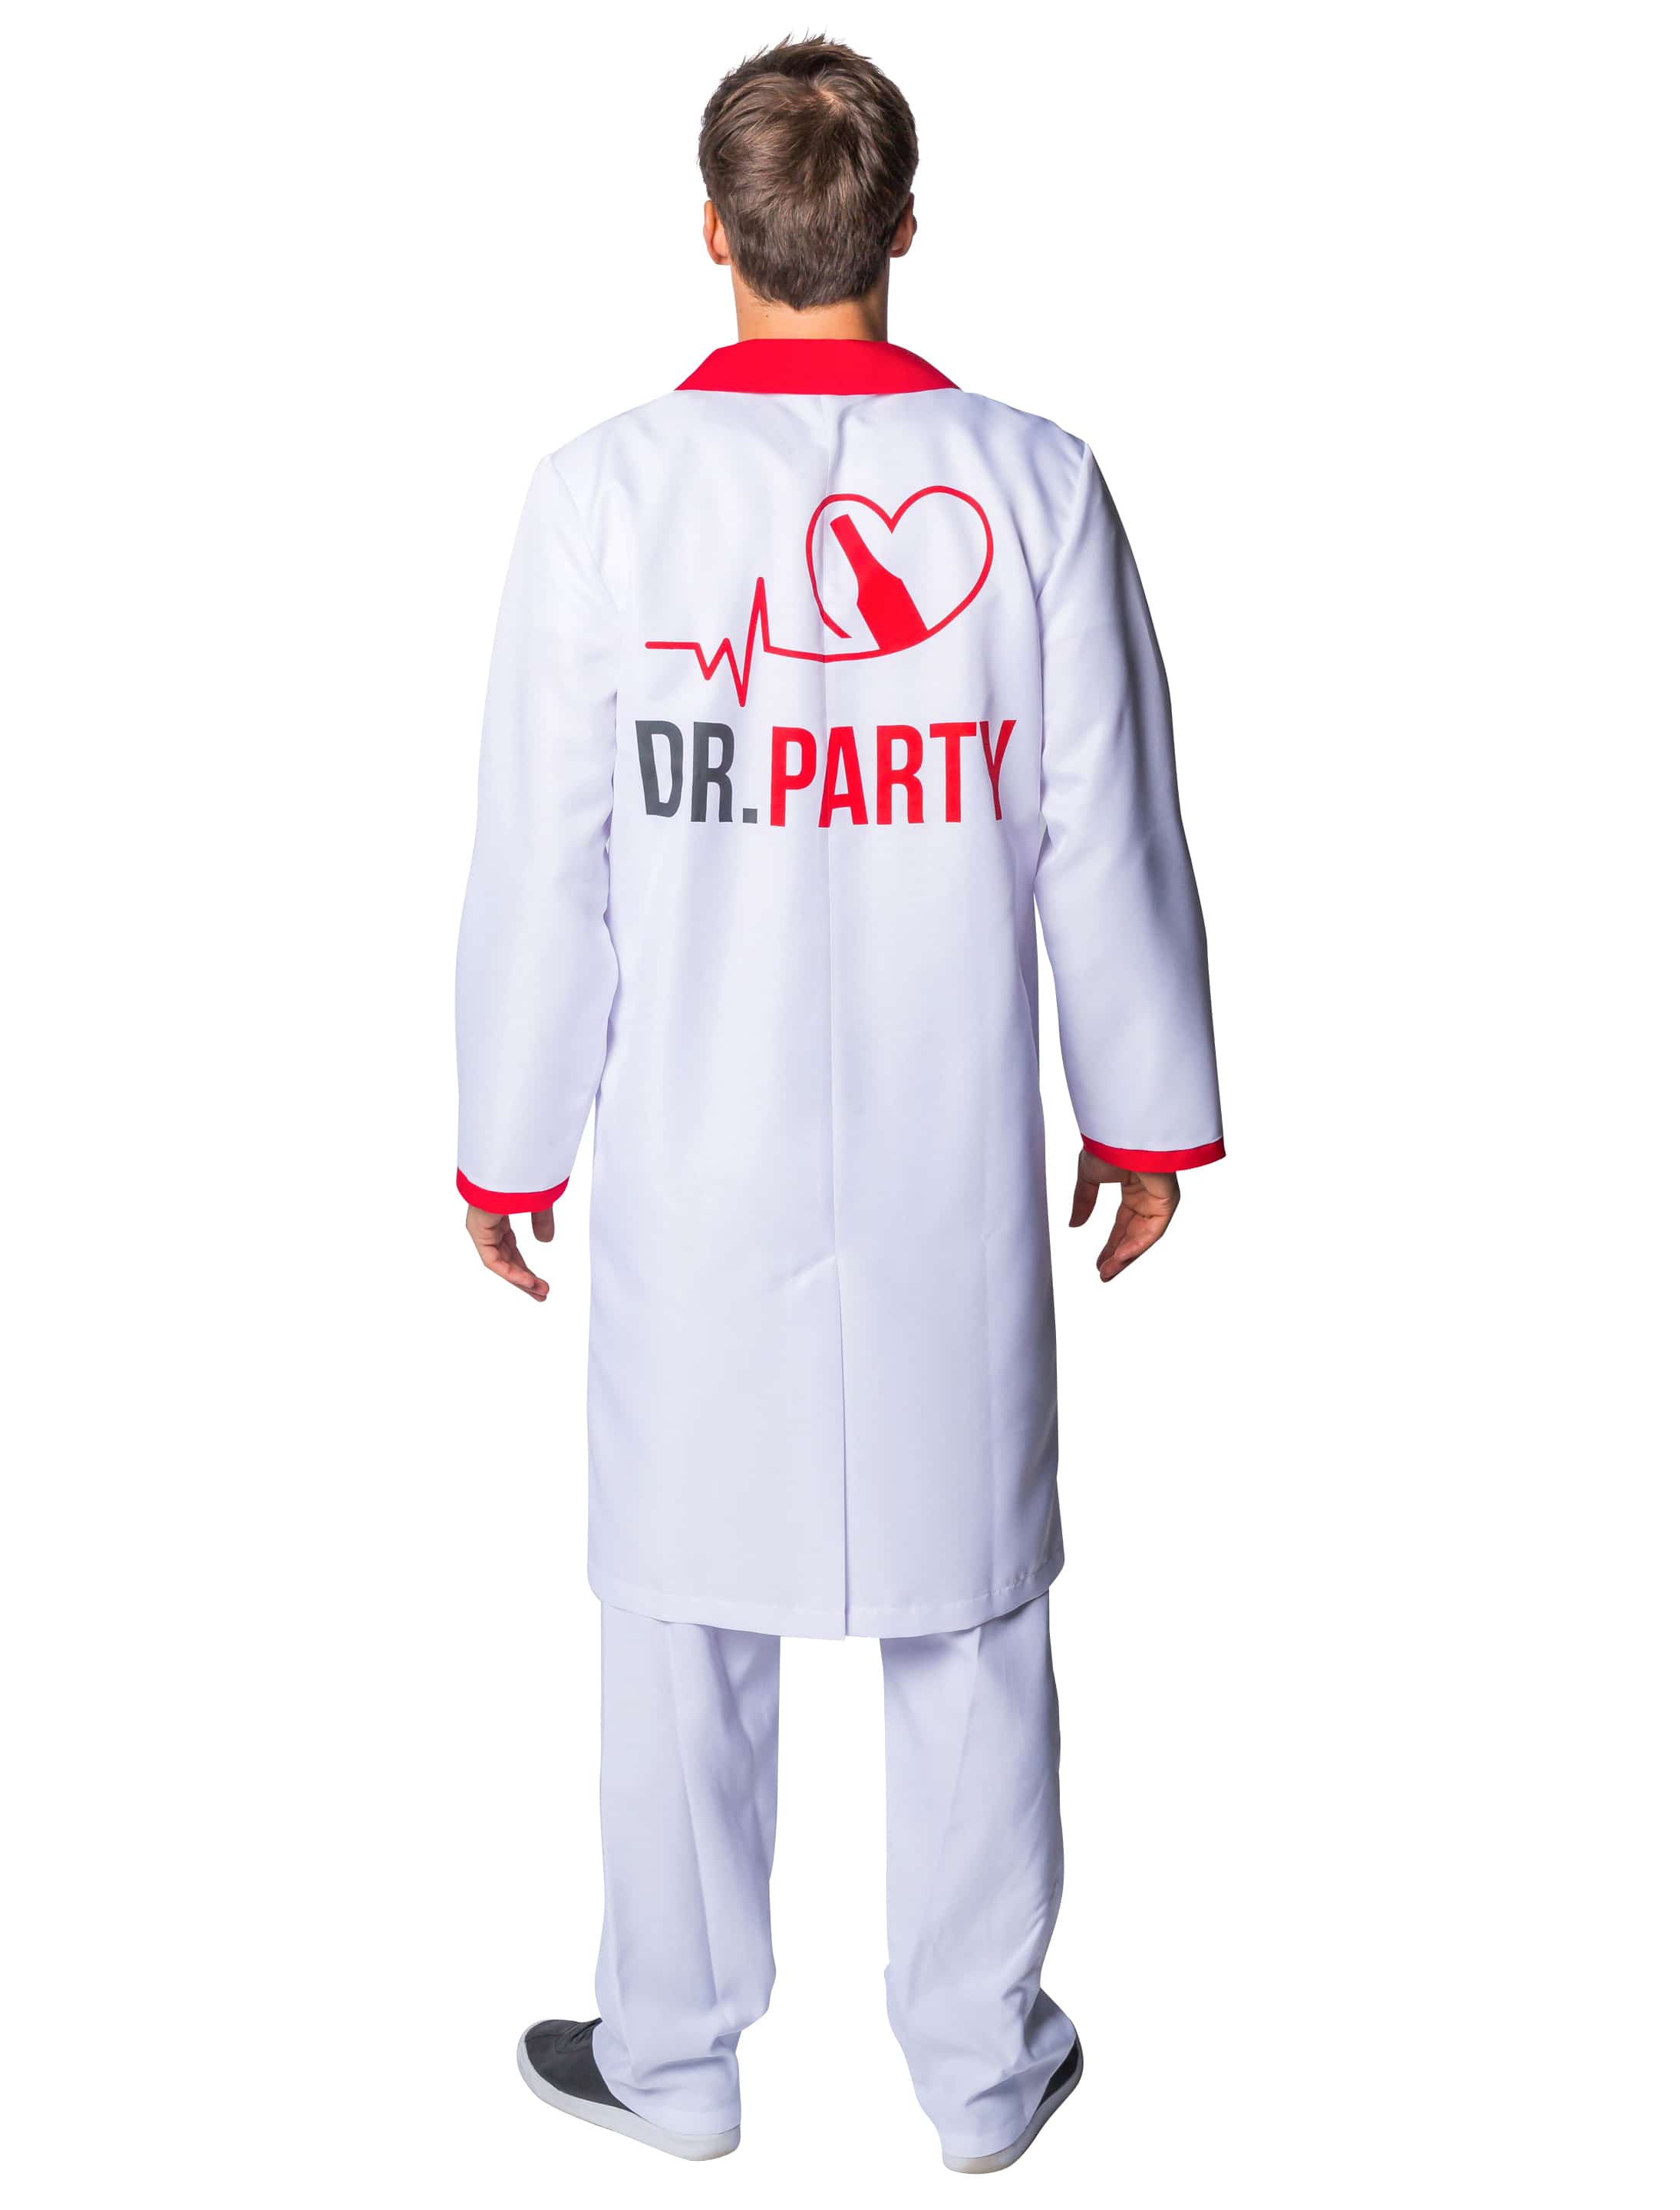 Doktorkittel Dr. Party weiß XL/2XL